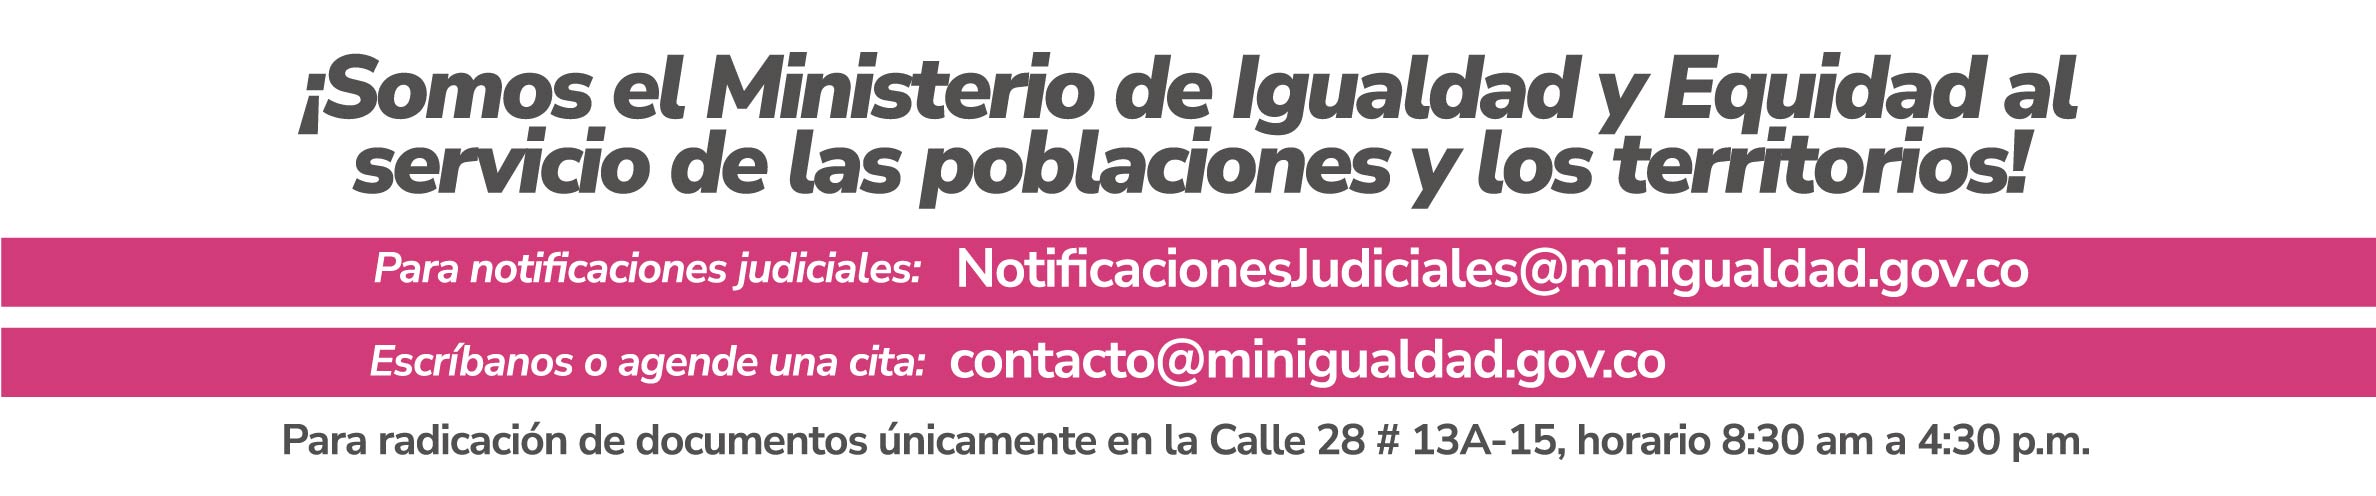 De lunes a viernes, de 8:30 a.m. a 4:30 p.m. Jornada continua Vicepresidencia de la República, Calle 28 #13A-15.